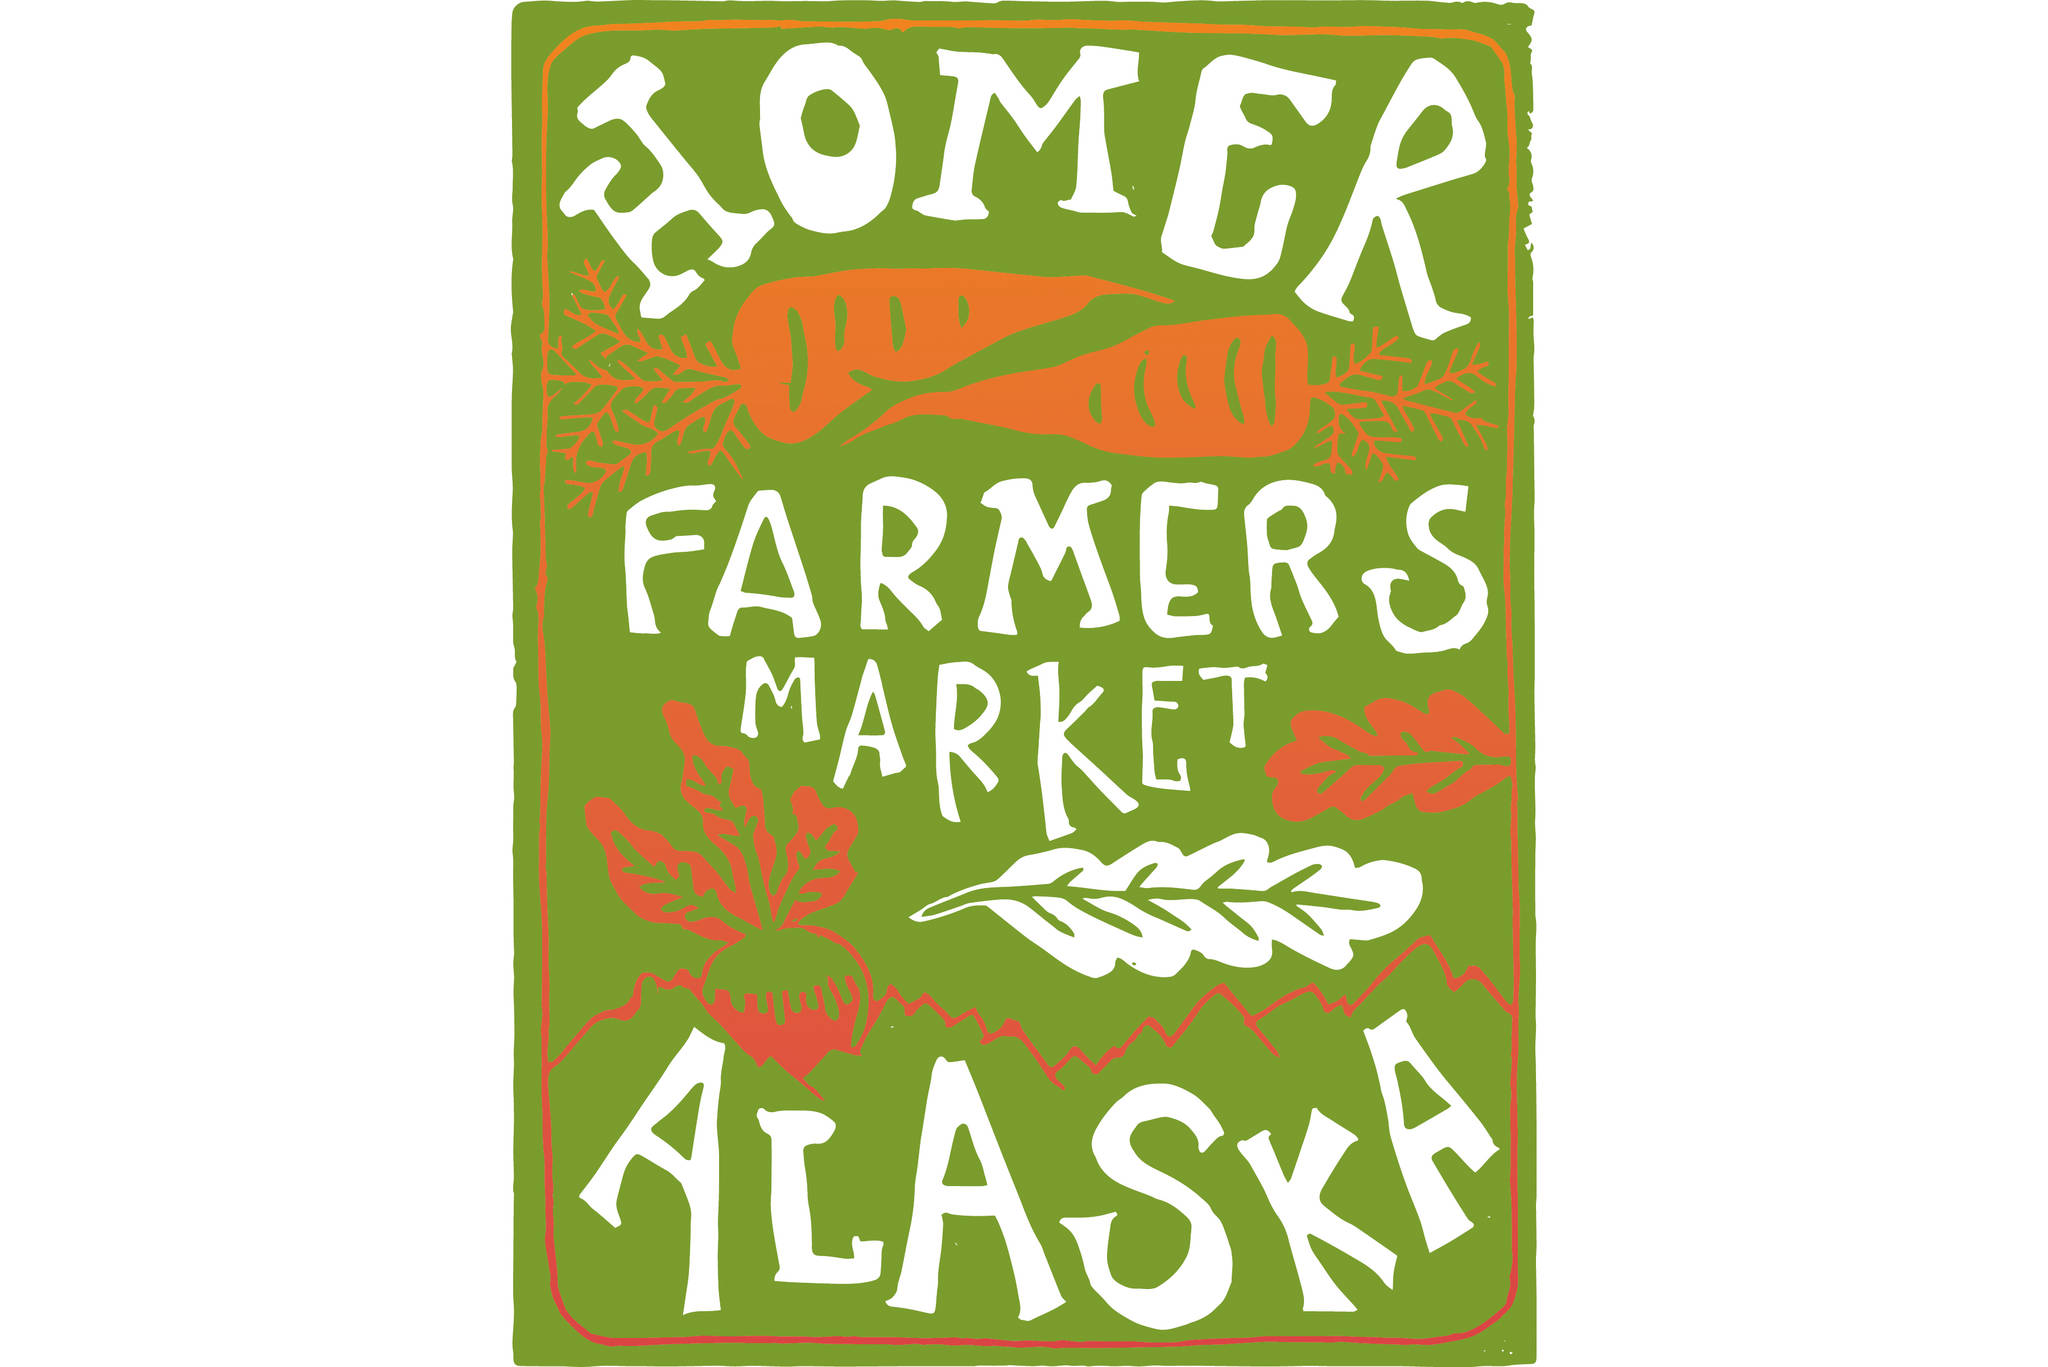 Homer Farmers Market: Small touches make Market family friendly